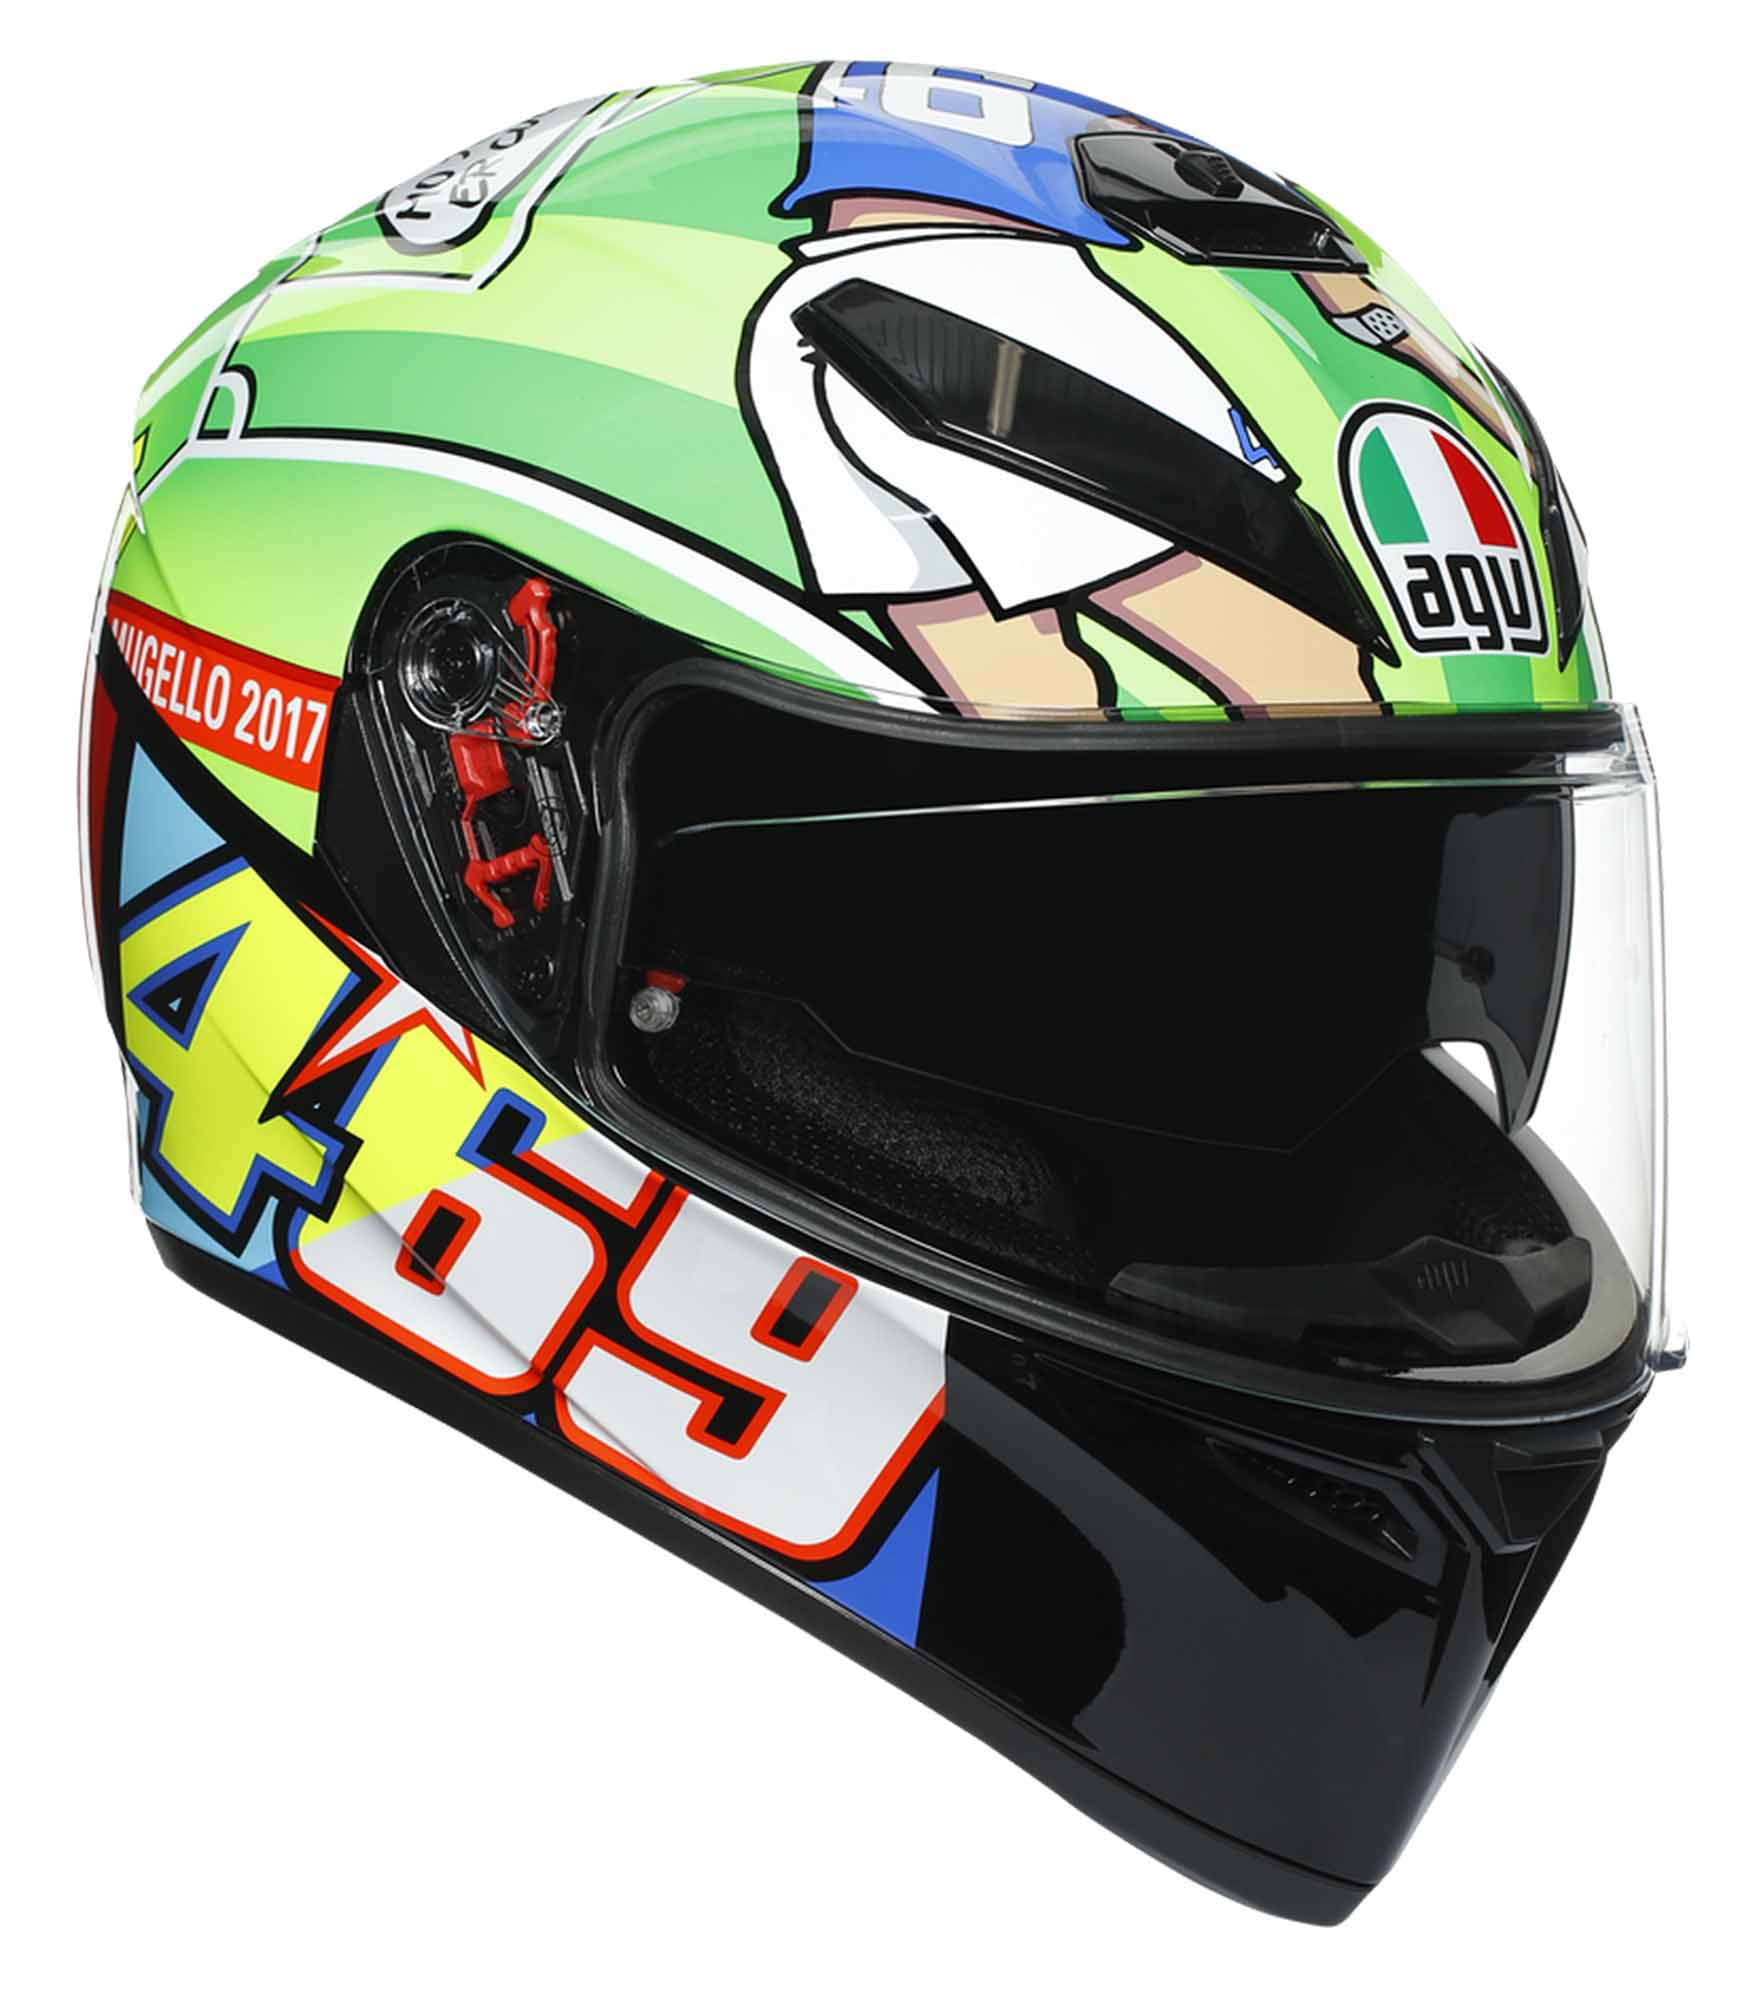 The Chicken Replica L AGV K3 Full Face VR46 Rossi Motorcycle Bike Helmet